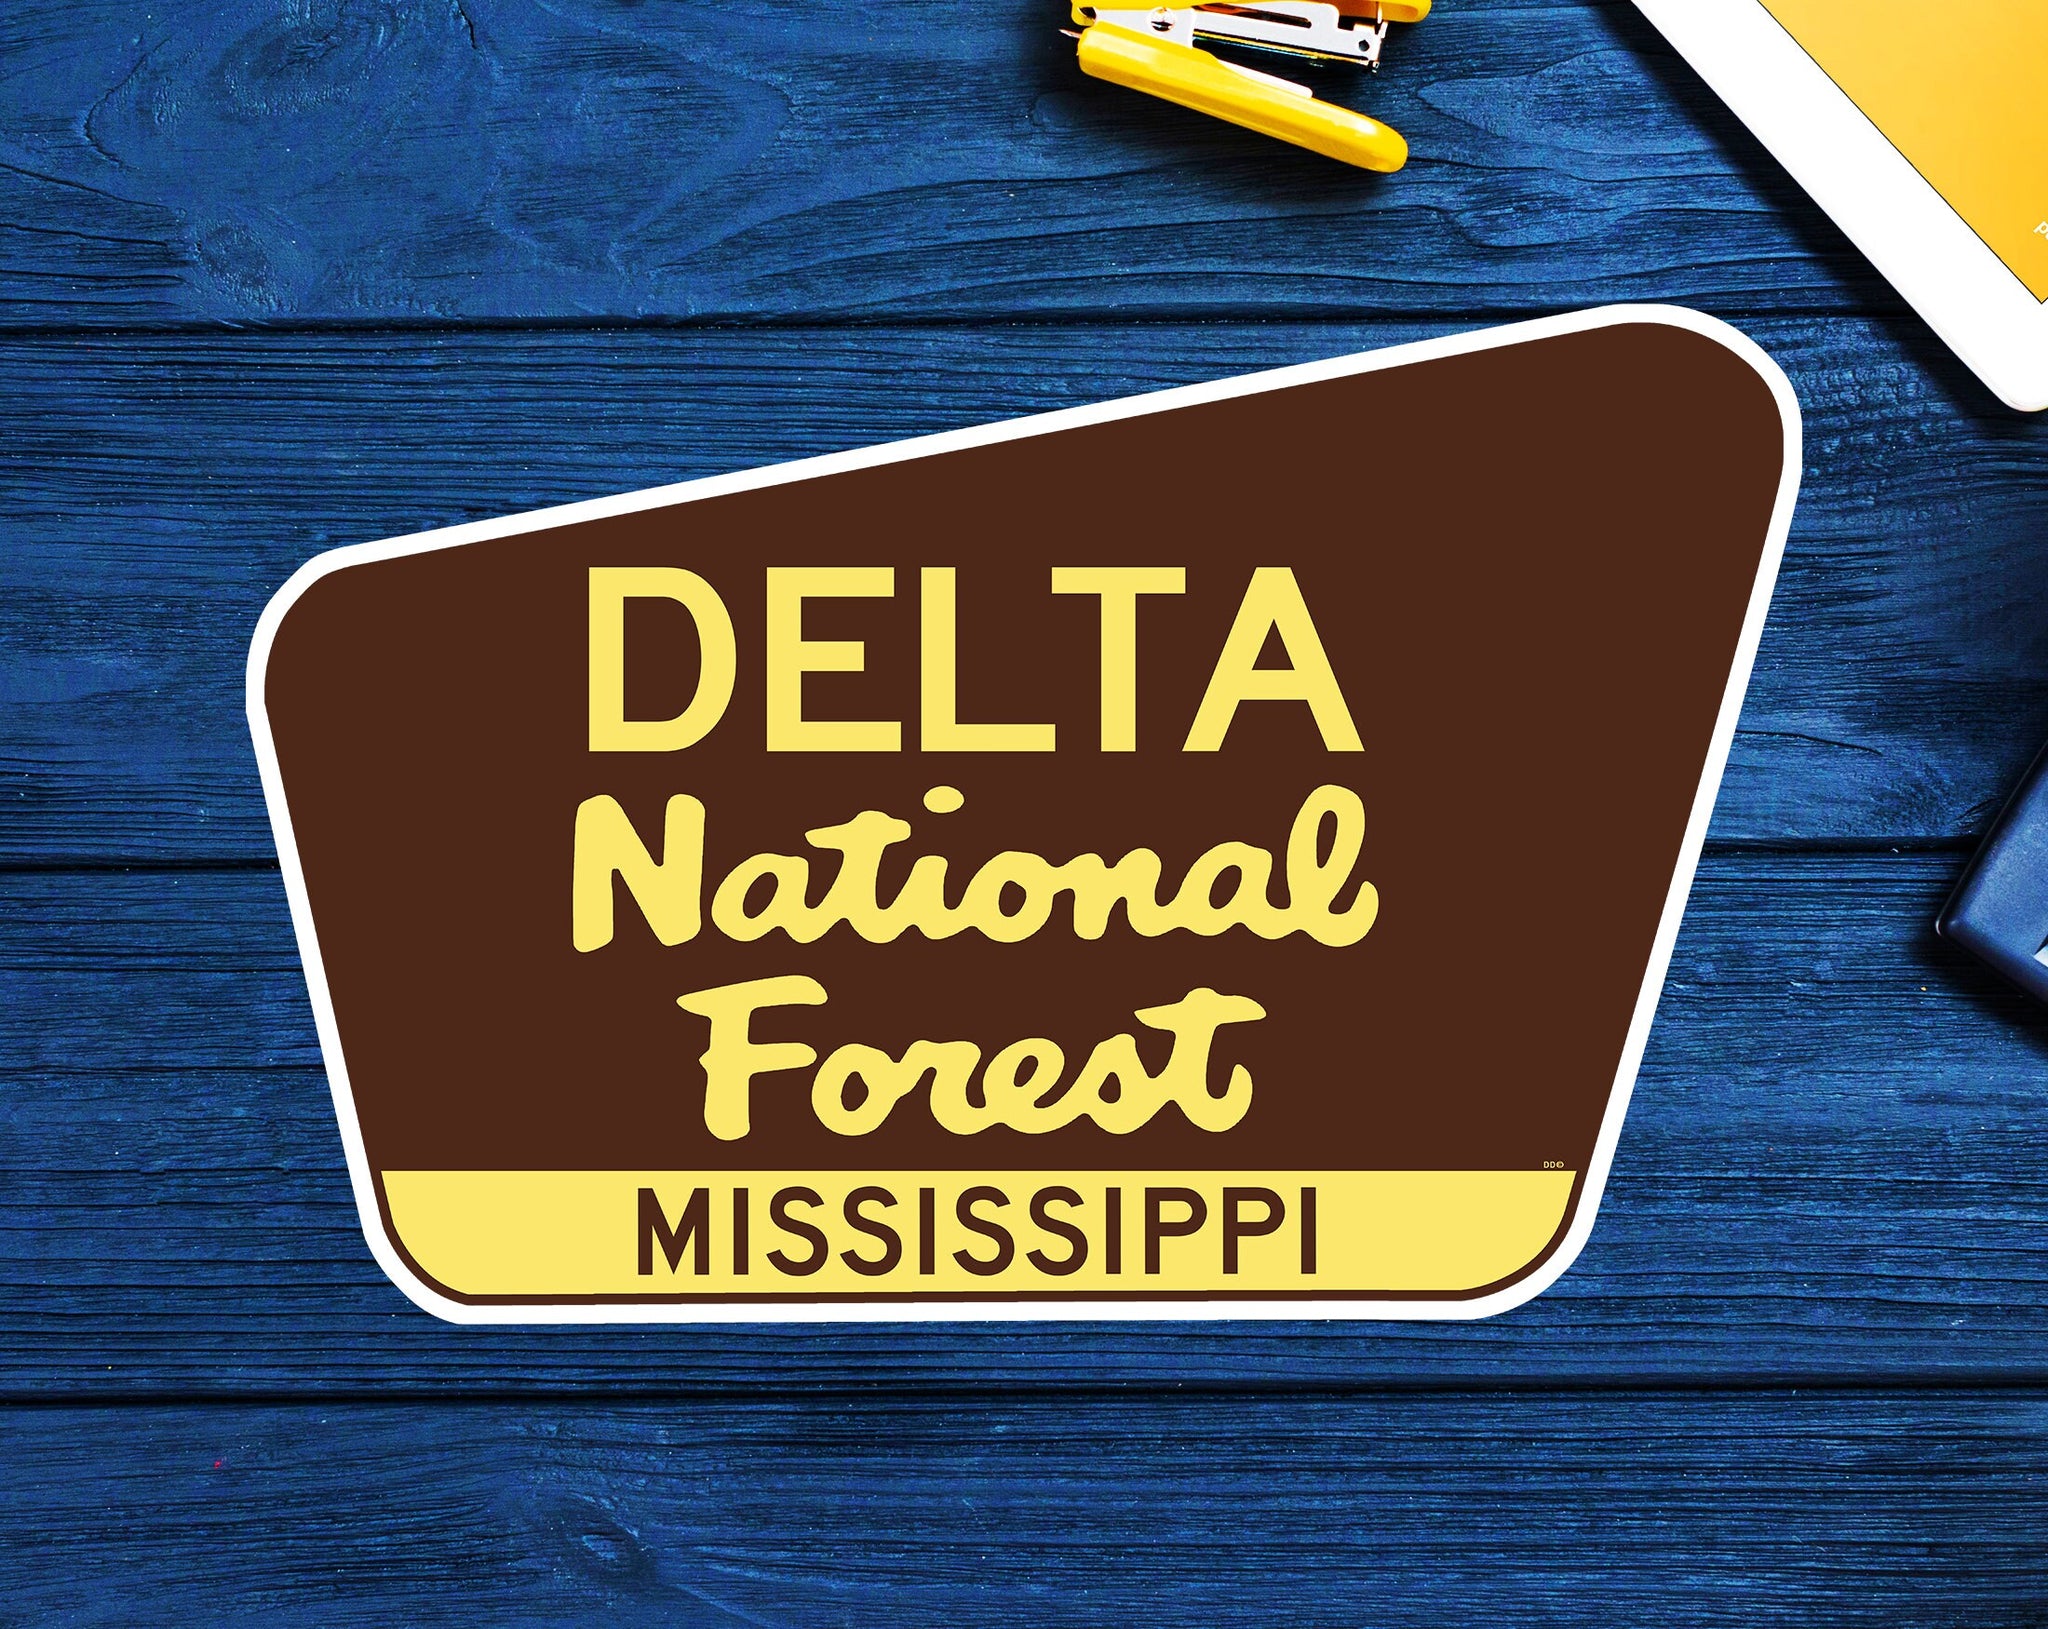 Delta National Forest Decal Sticker 3.75" x 2.5" Mississippi Vinyl MS